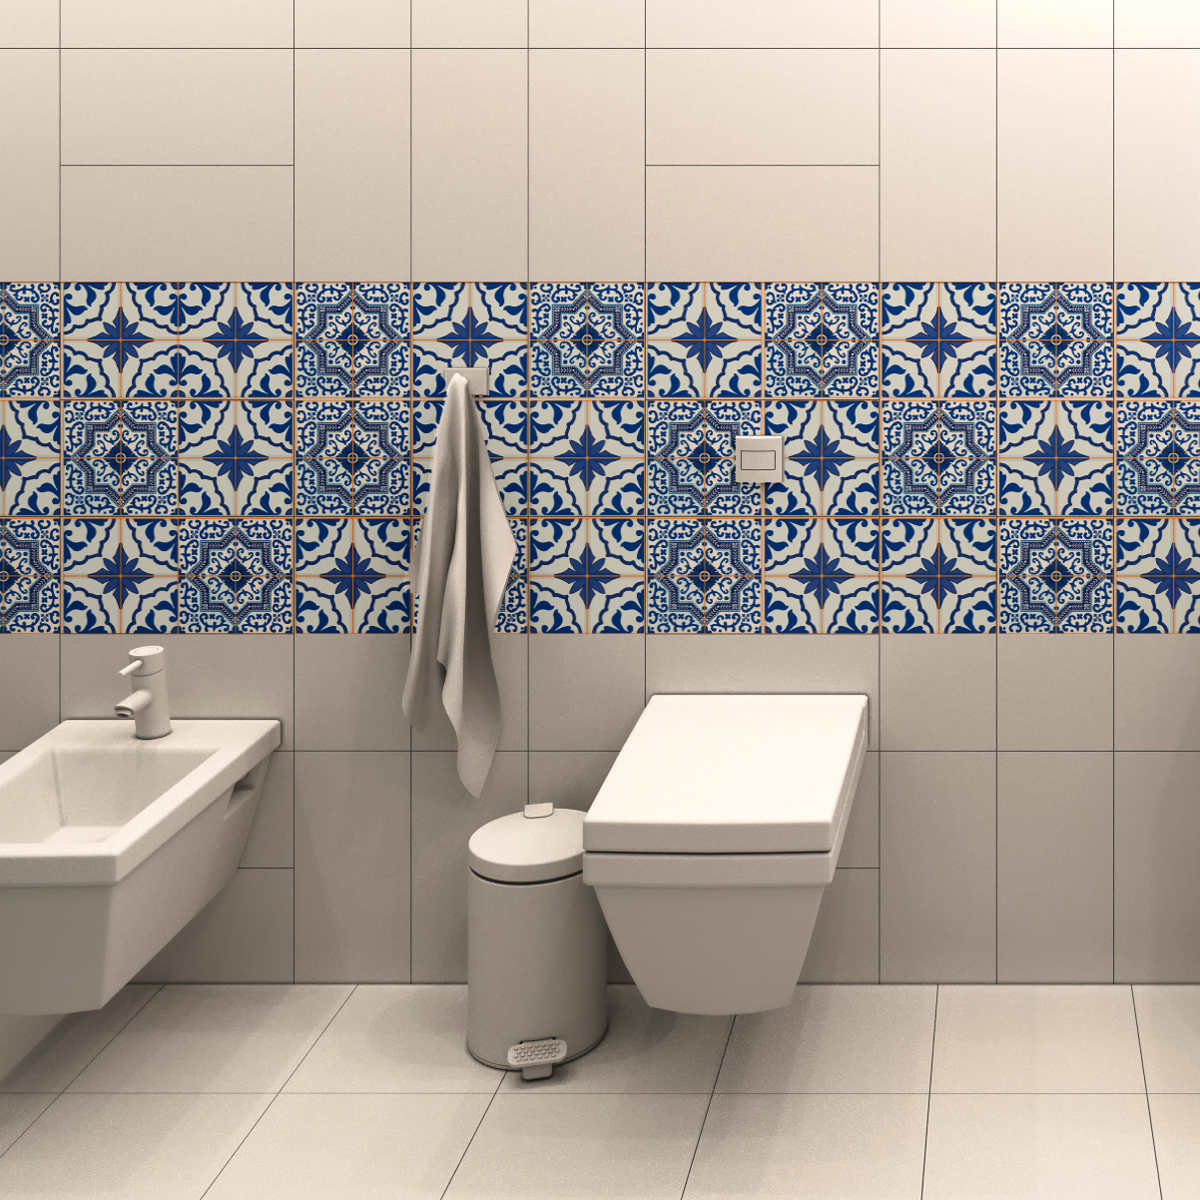 9 wall stickers tiles azulejos Sérgio